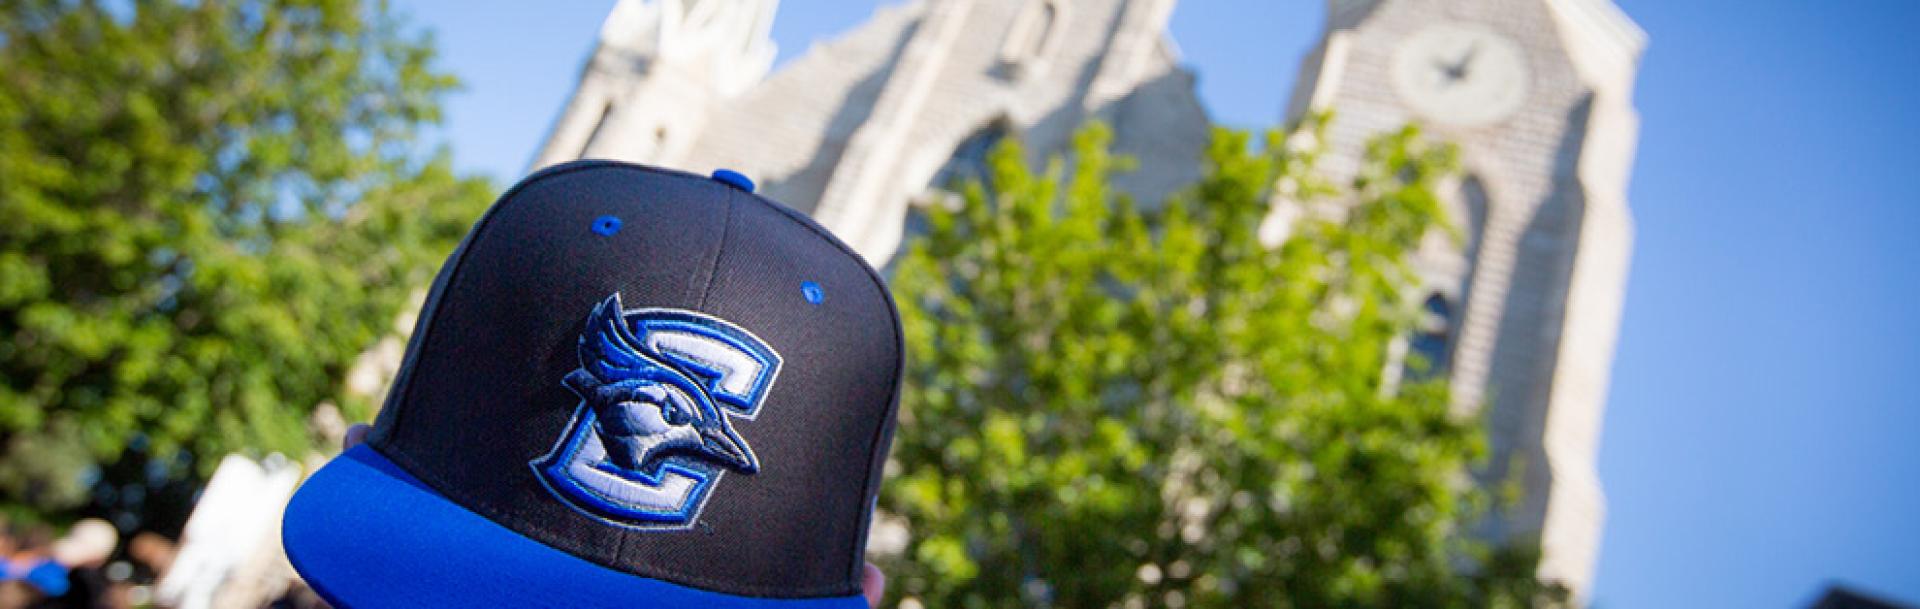 Student wearing Creighton Bluejays baseball cap on campus.